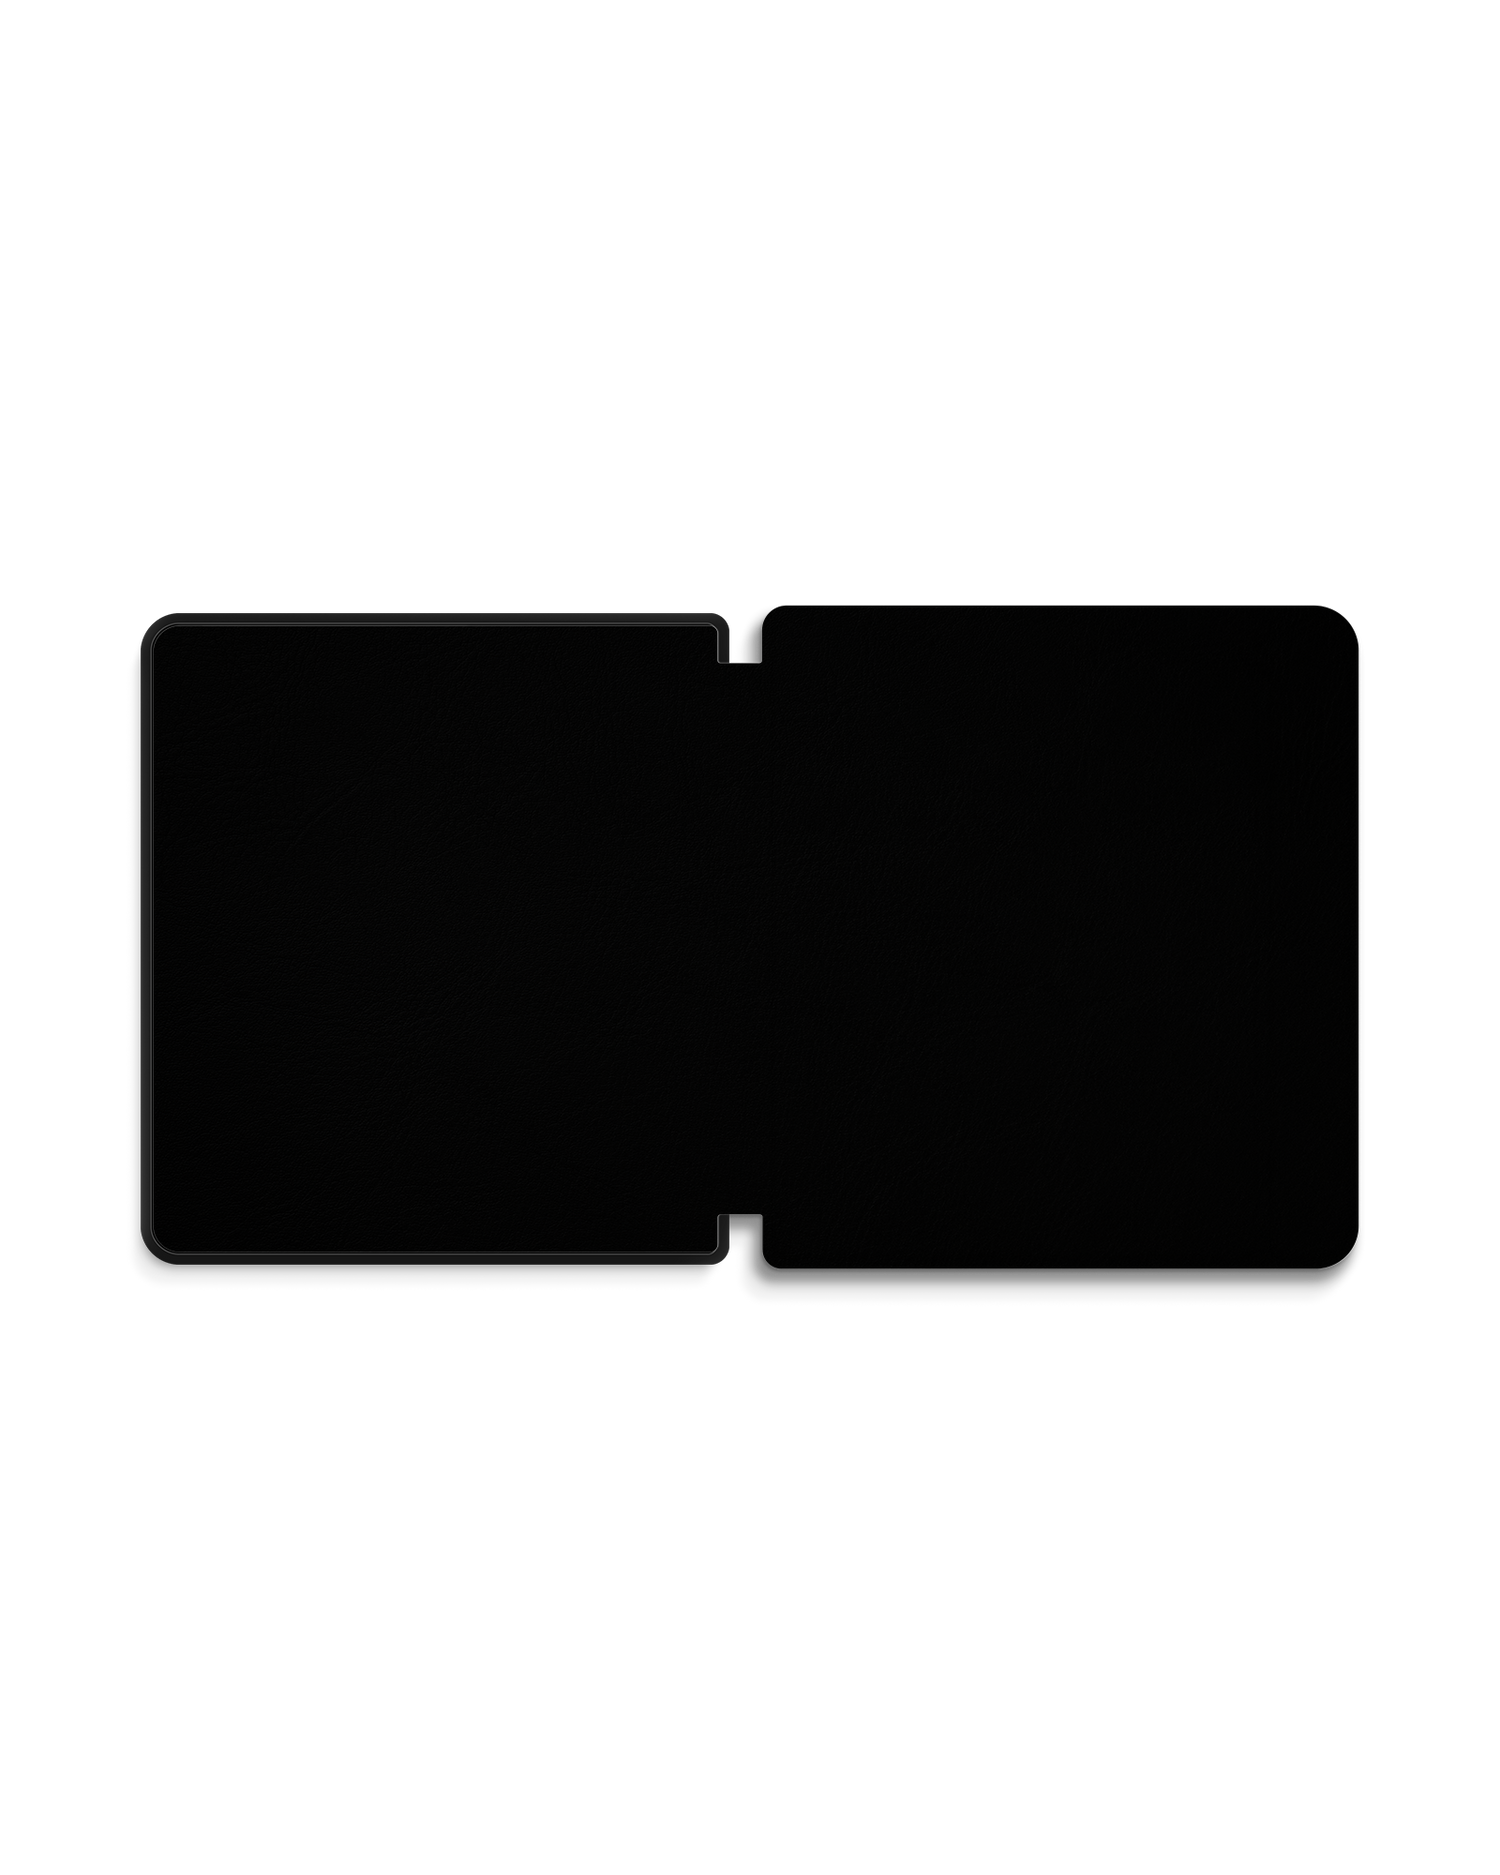 BLACK eReader Smart Case for tolino epos 2: Opened exterior view